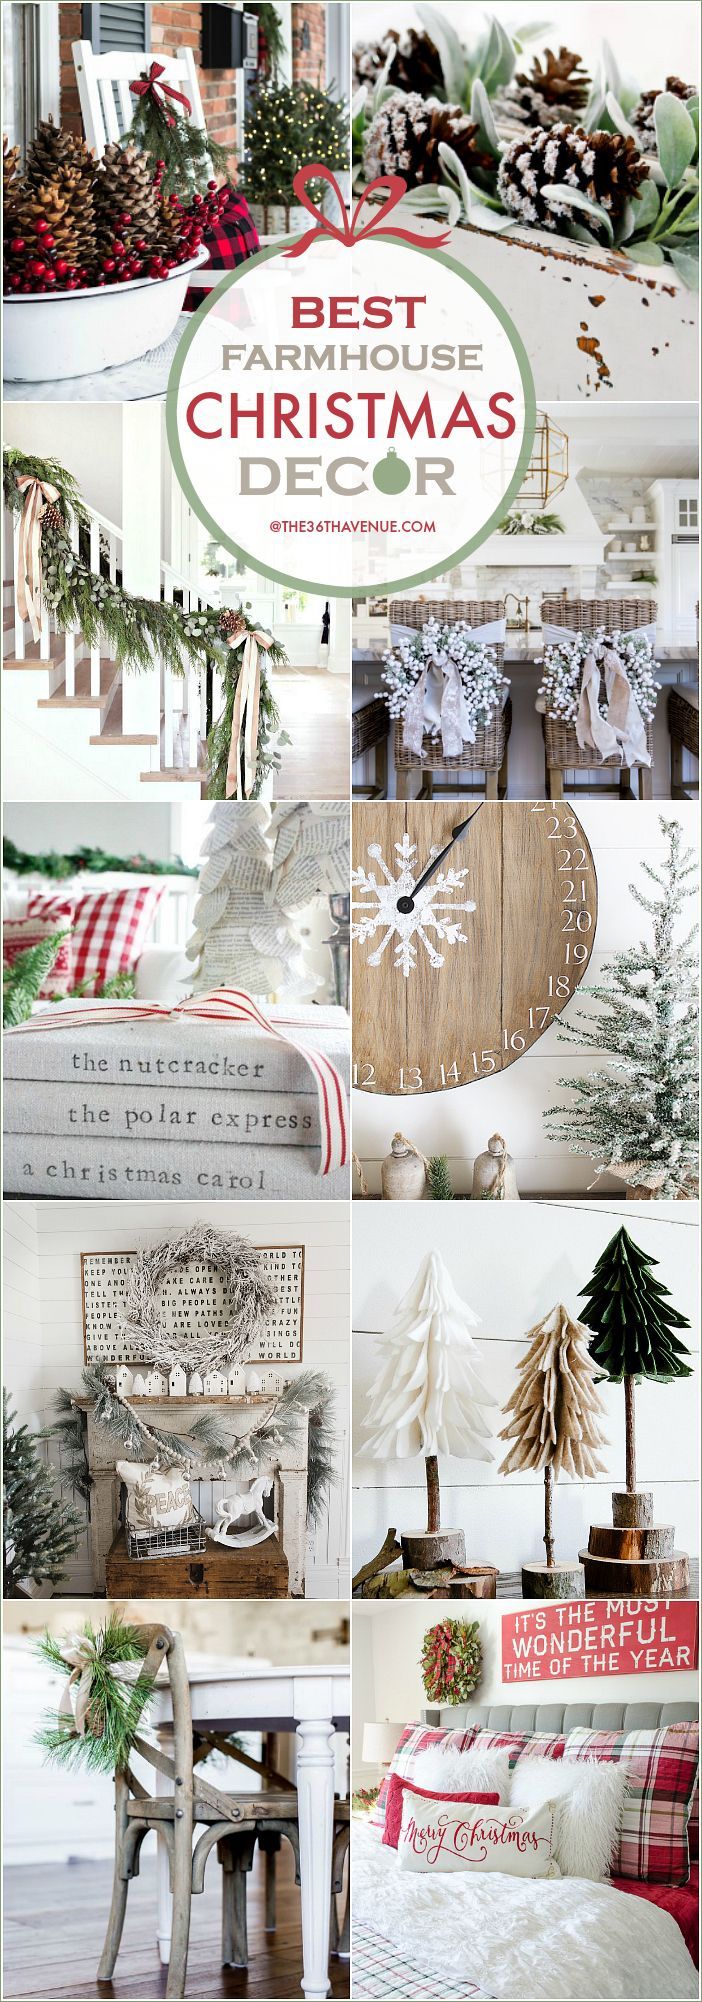 Farmhouse Christmas Decor Ideas. Beautiful Christmas decorations for your home.